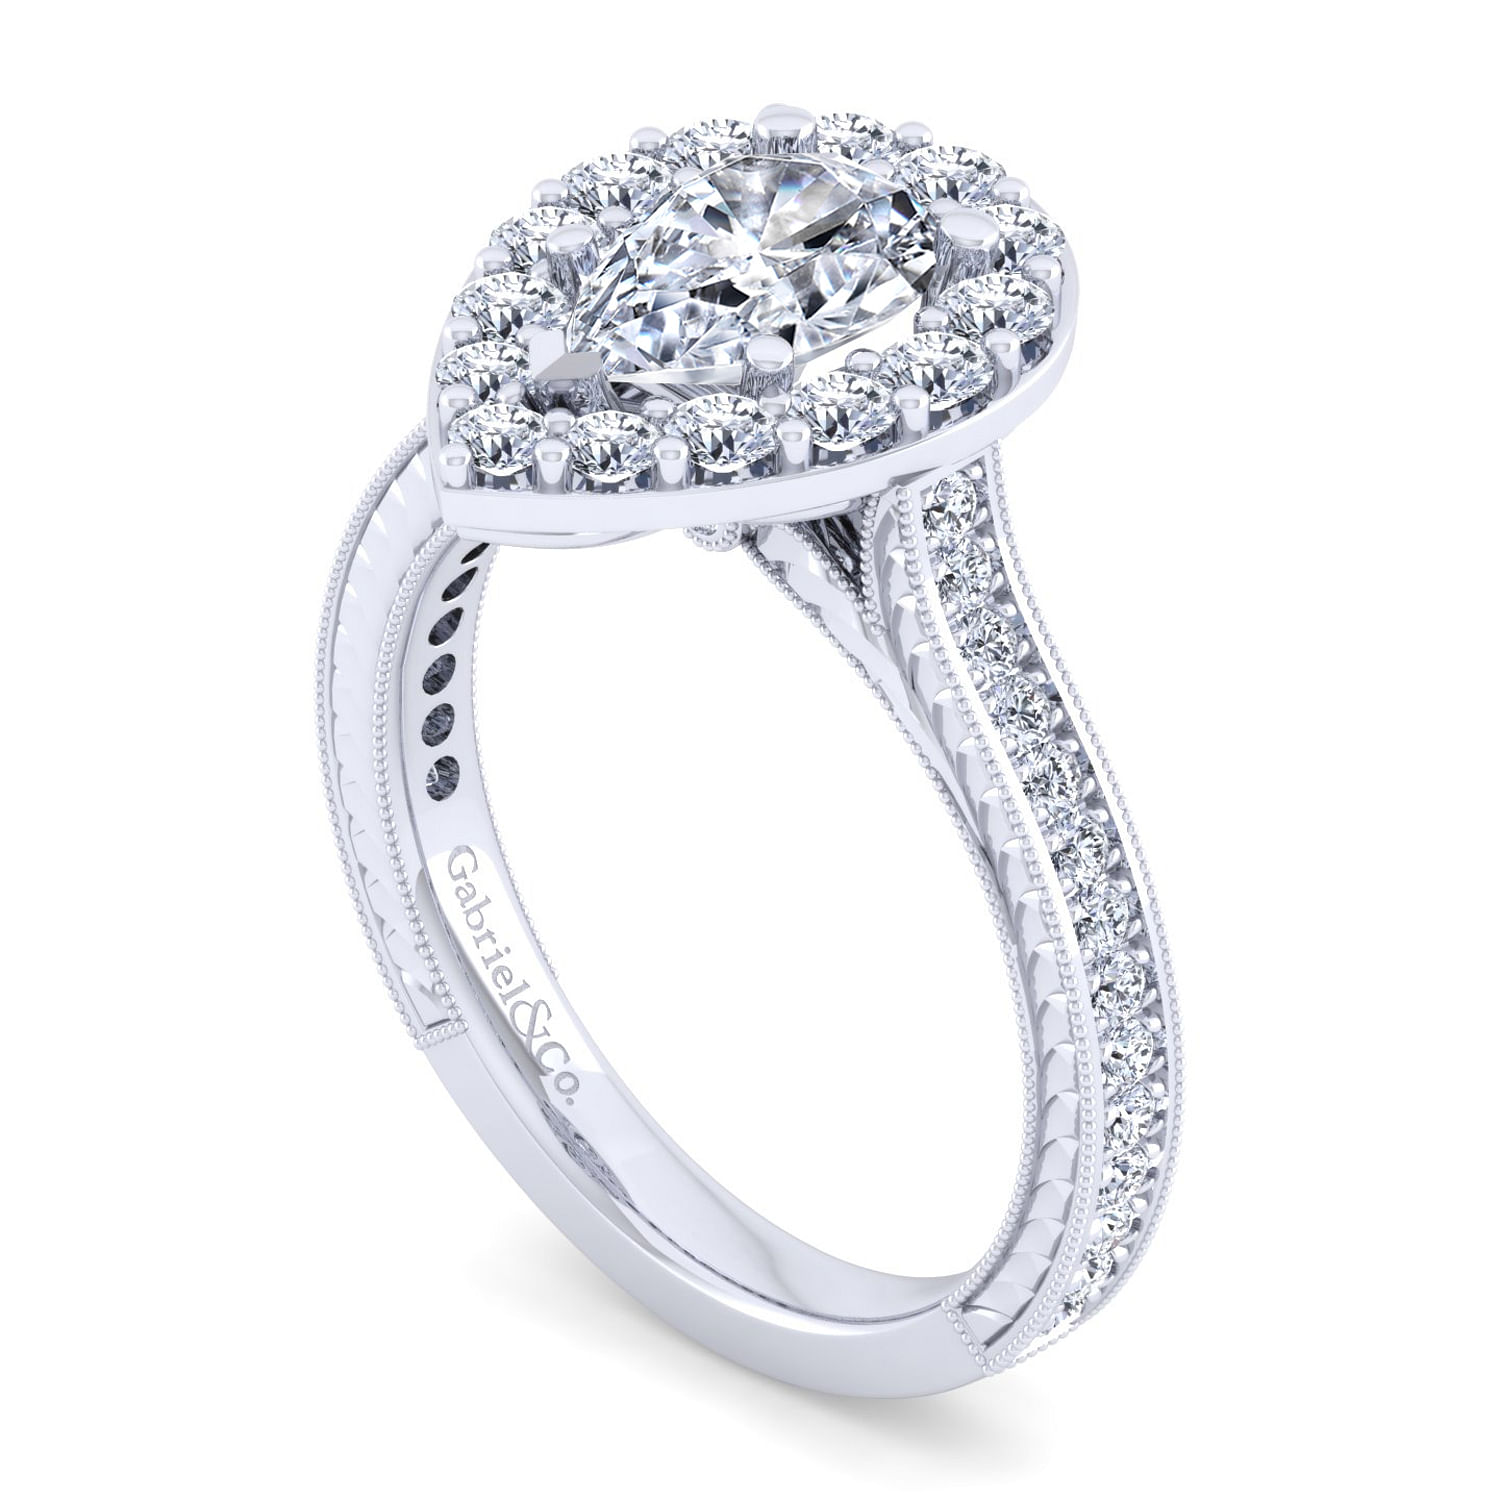 Vintage Inspired 14K White Gold Pear Shape Halo Diamond Engagement Ring